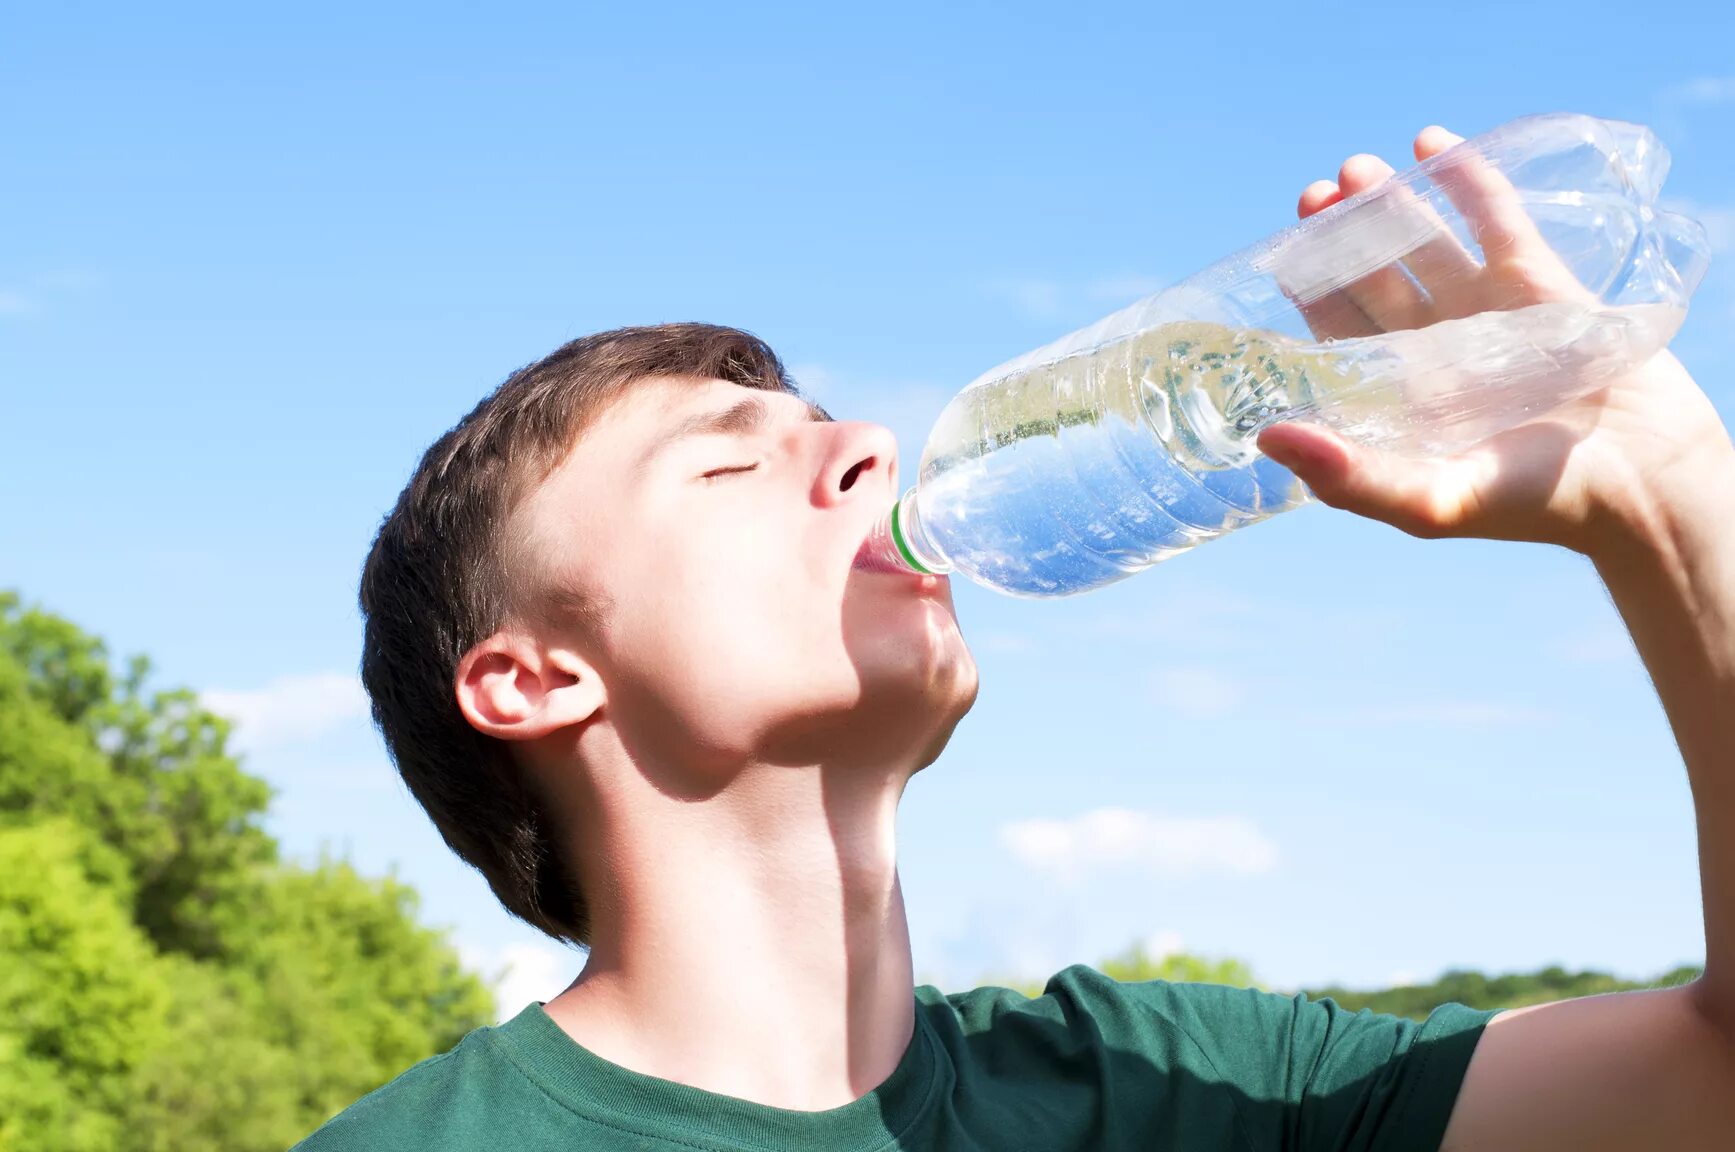 Человек пьет из бутылки. Пьет воду из бутылки. Парень с бутылкой воды. Парень пьет воду из бутылки. Пить воду.